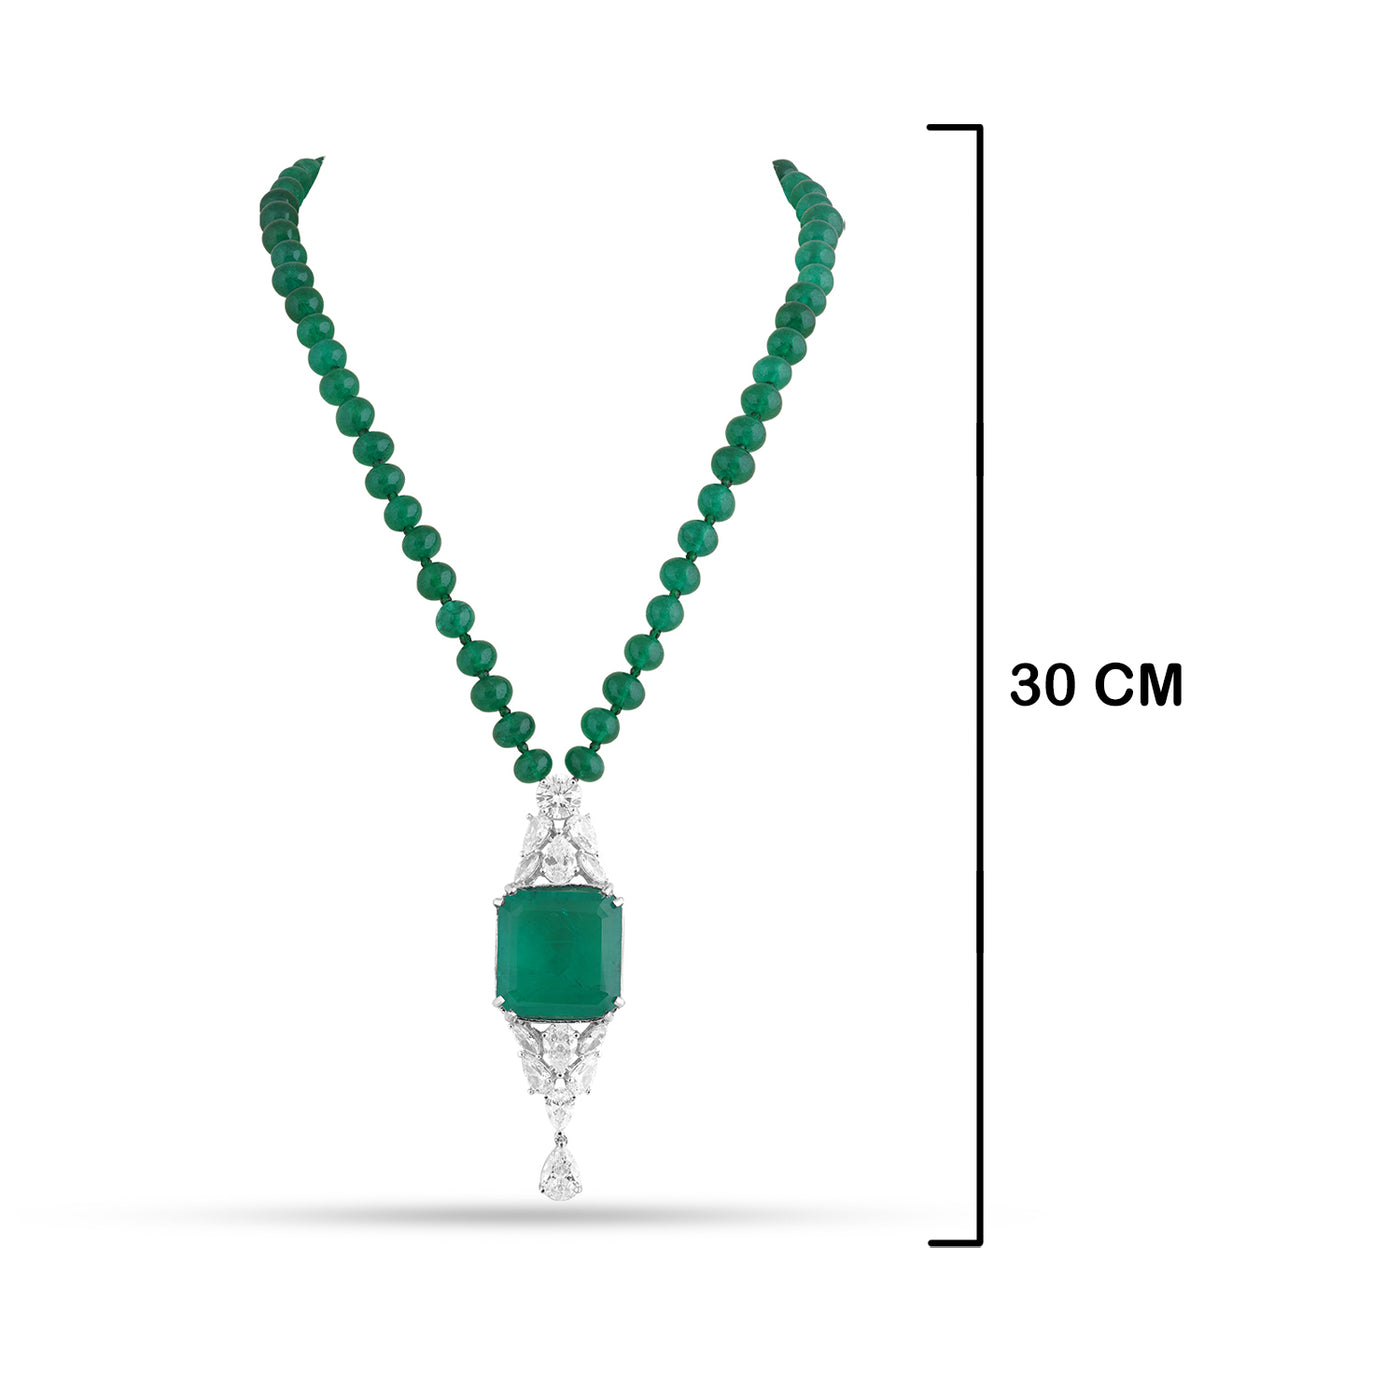 Haziqah - Emerald green stone necklace set